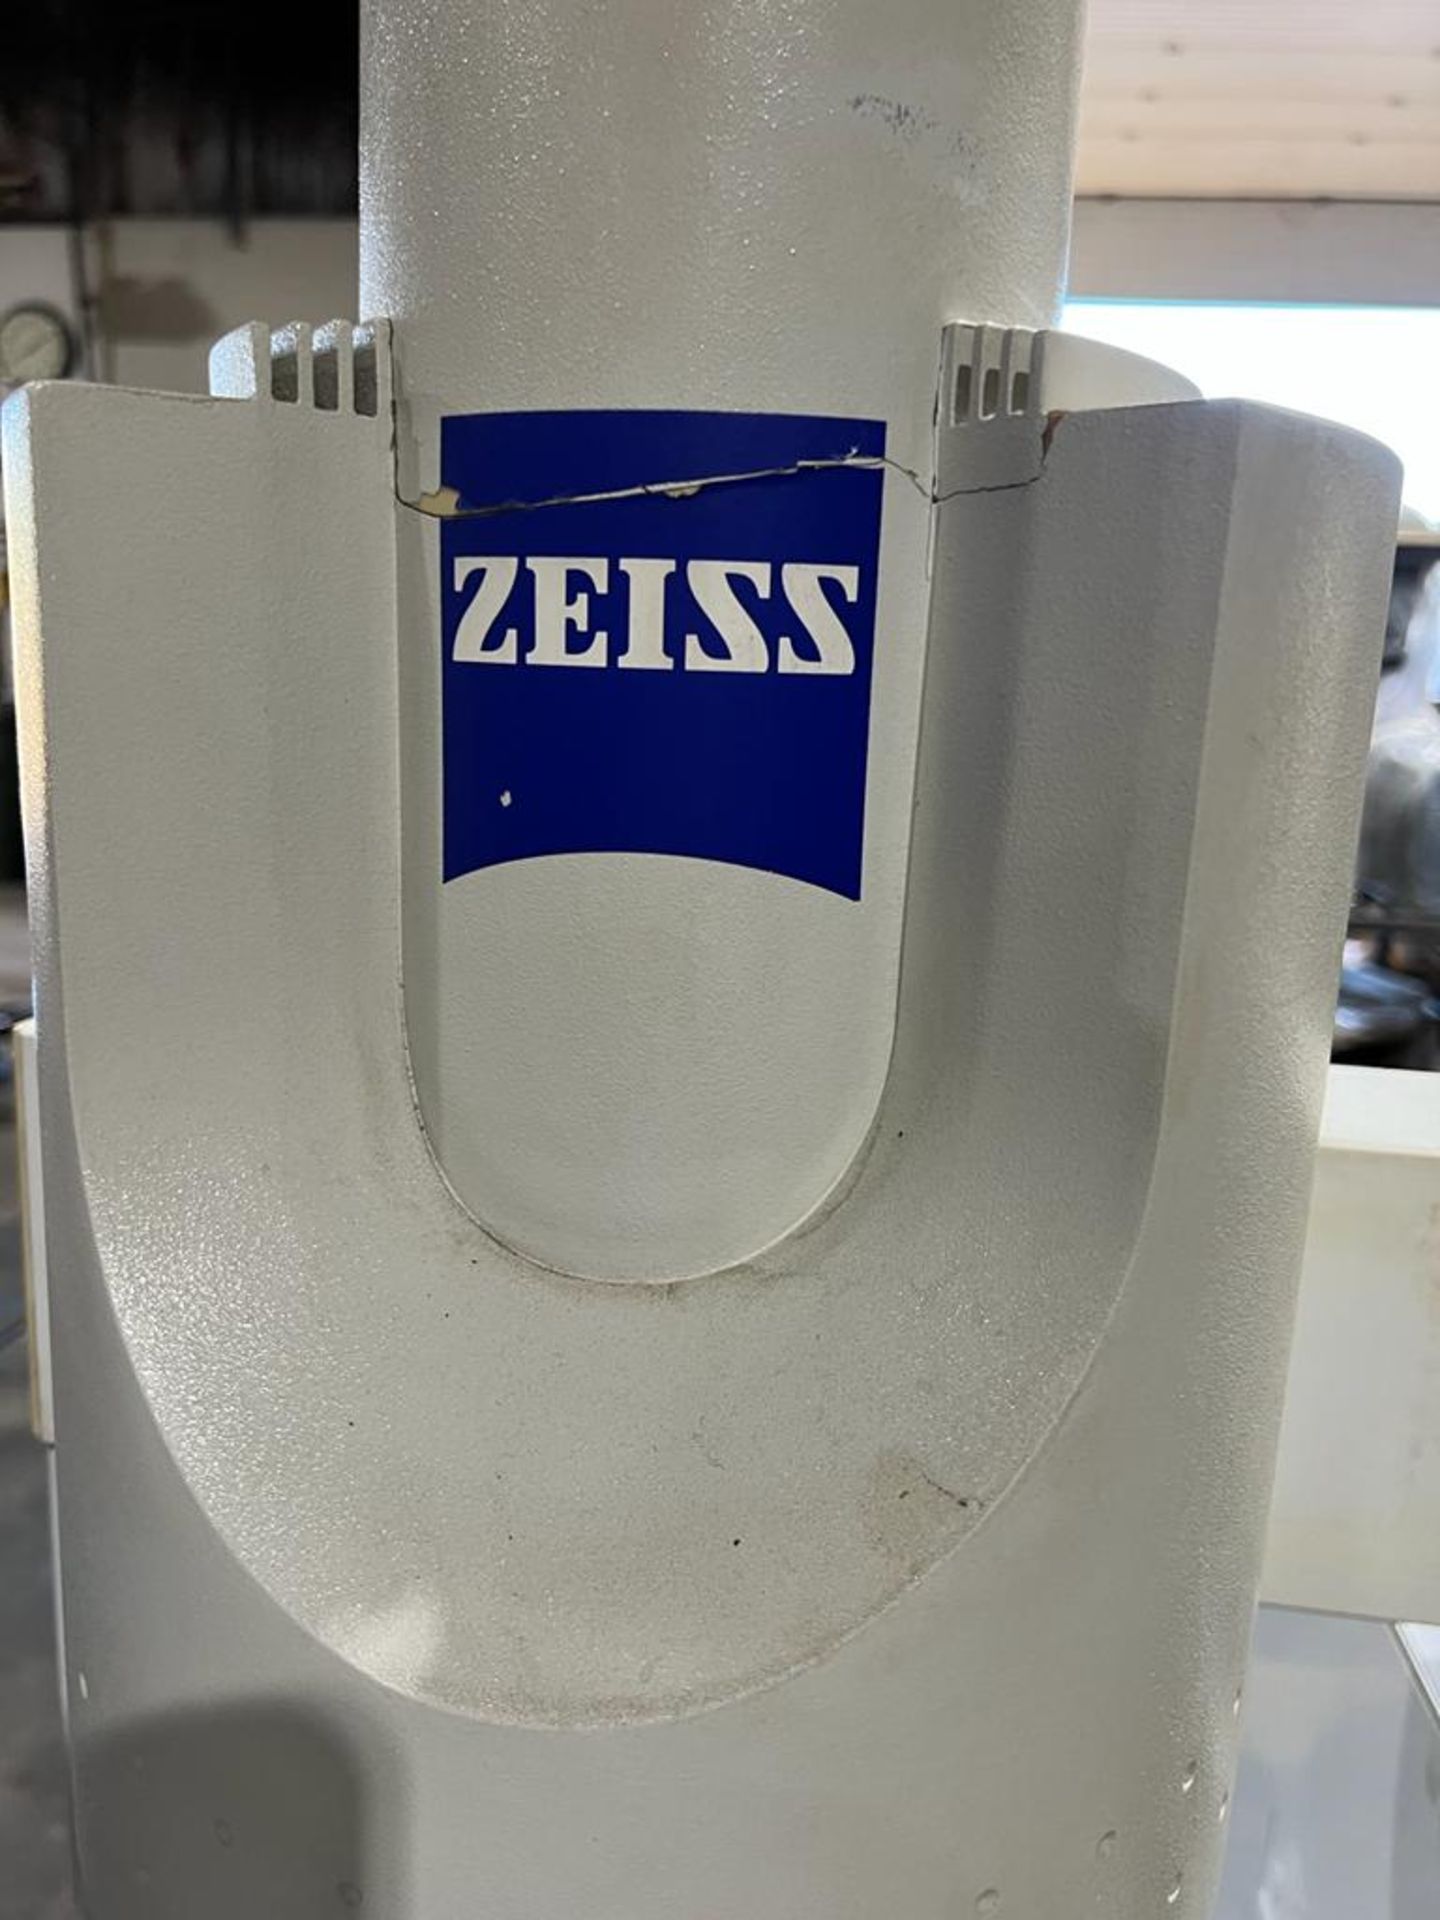 Carl Zeiss CMM model VISTA 1620-14 Coordinate Measurement Machine with MIP Renishaw Probe System - Image 4 of 5